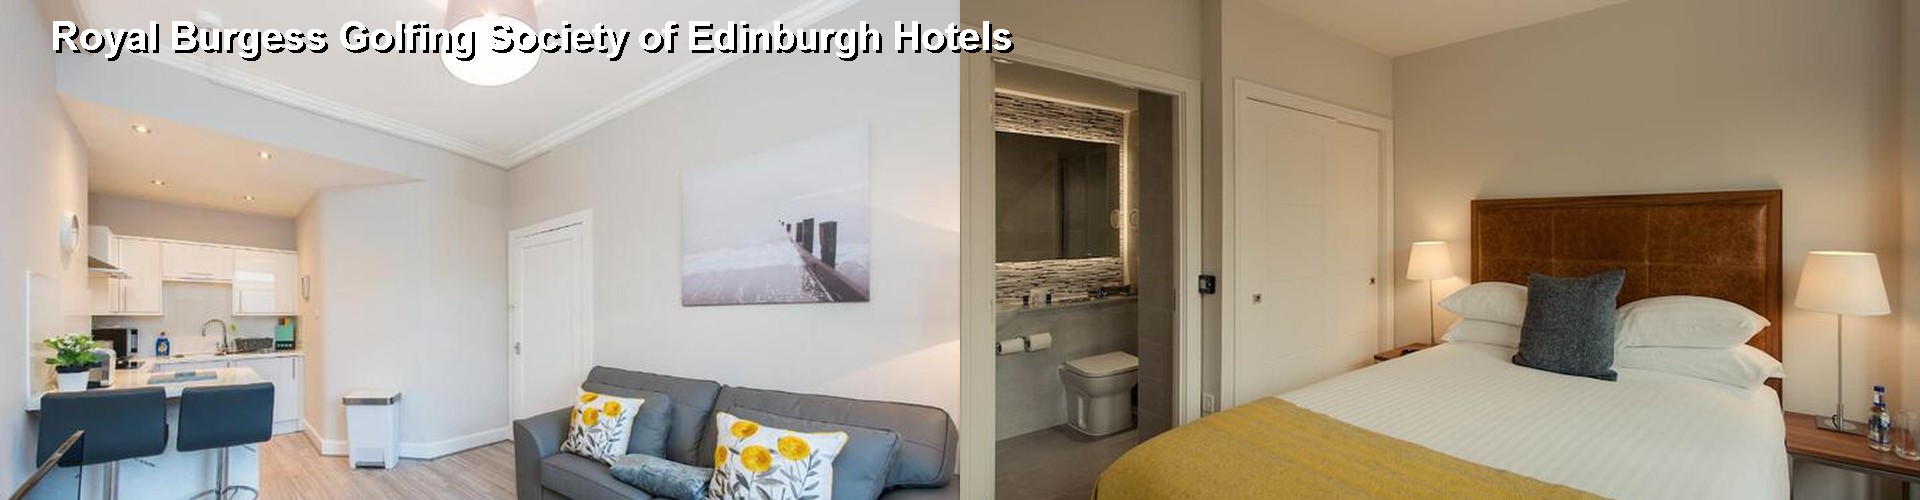 5 Best Hotels near Royal Burgess Golfing Society of Edinburgh